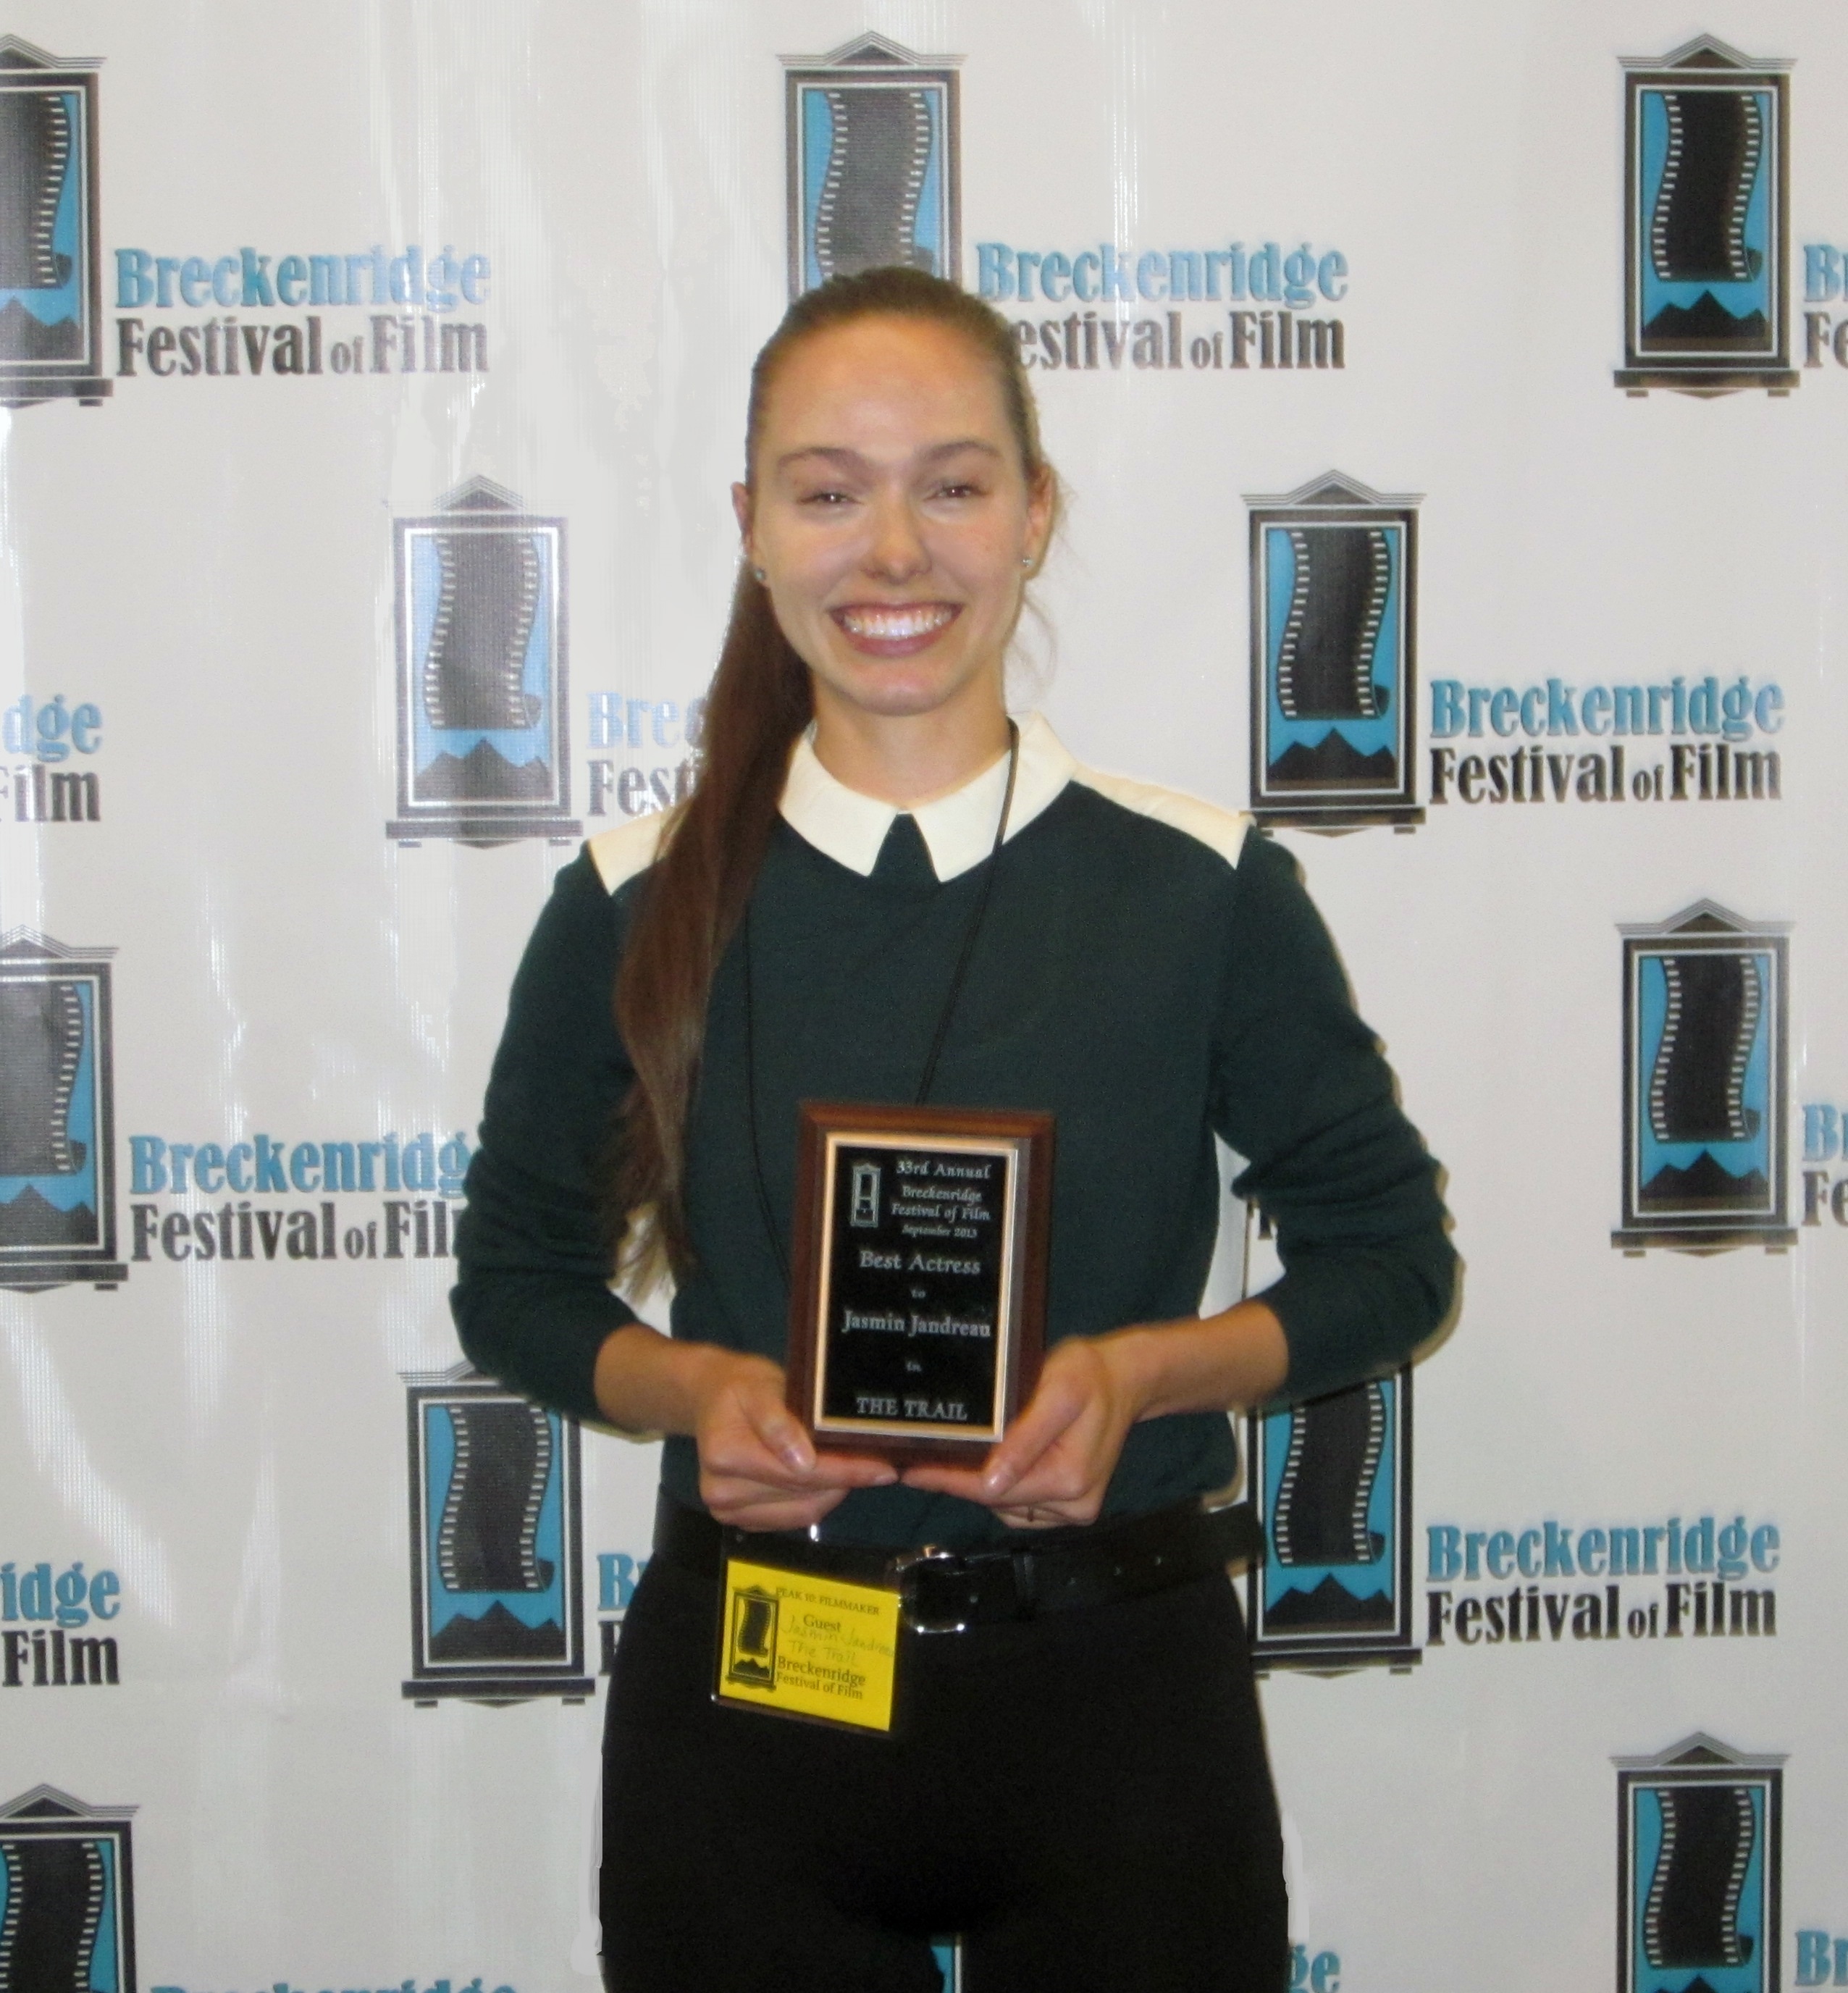 Jasmin recieved the award for Best Actress at the Breckenridge International Film Festival 2013